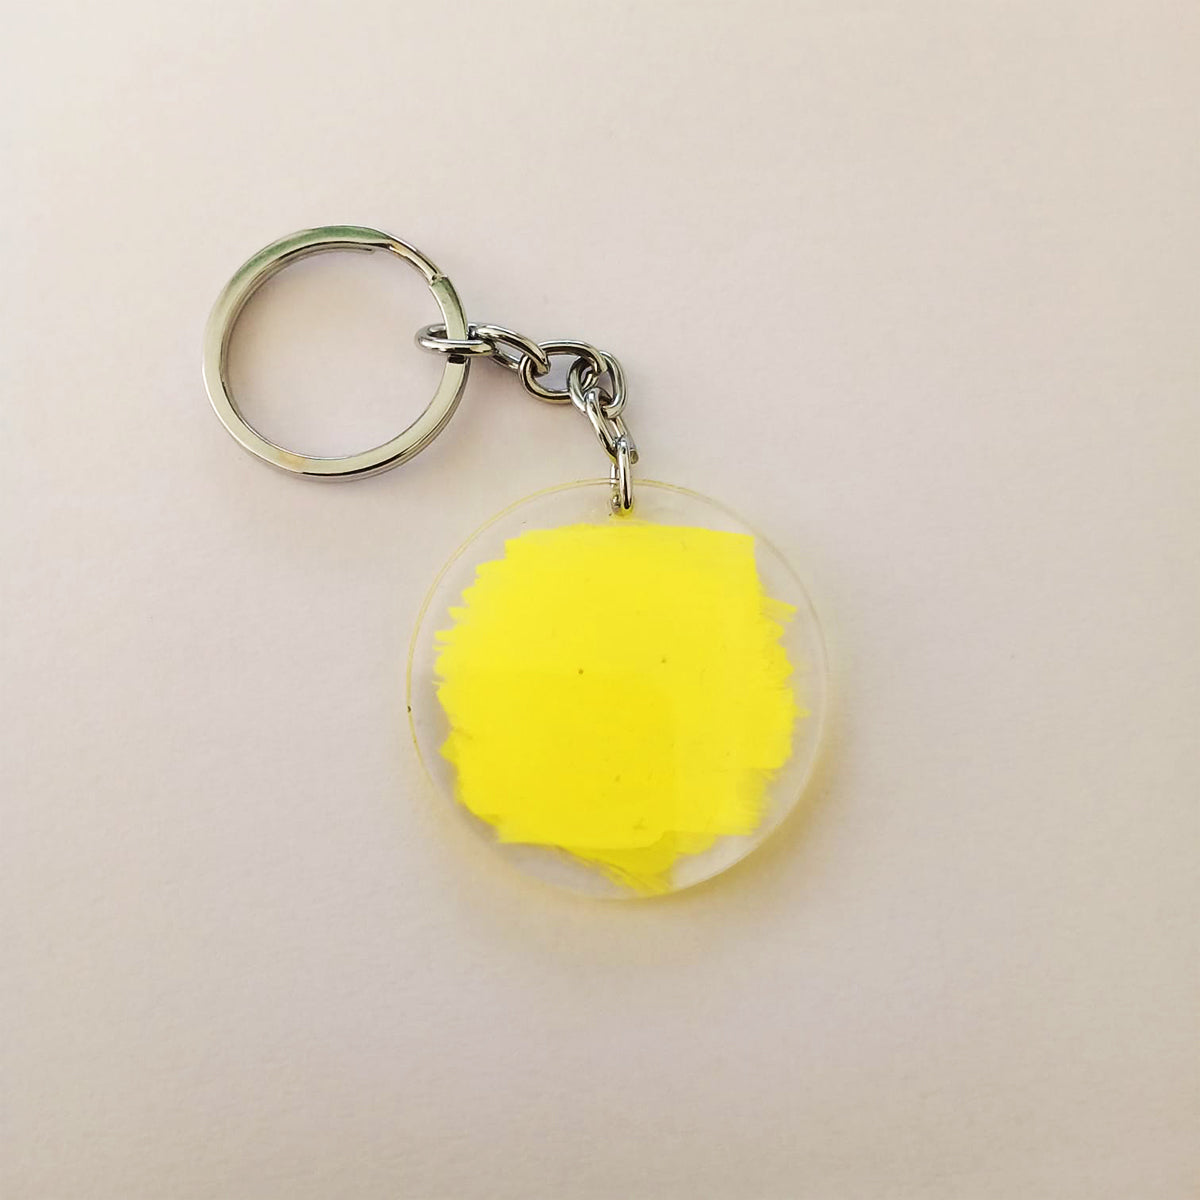 Personalized Round Shaped Keychain